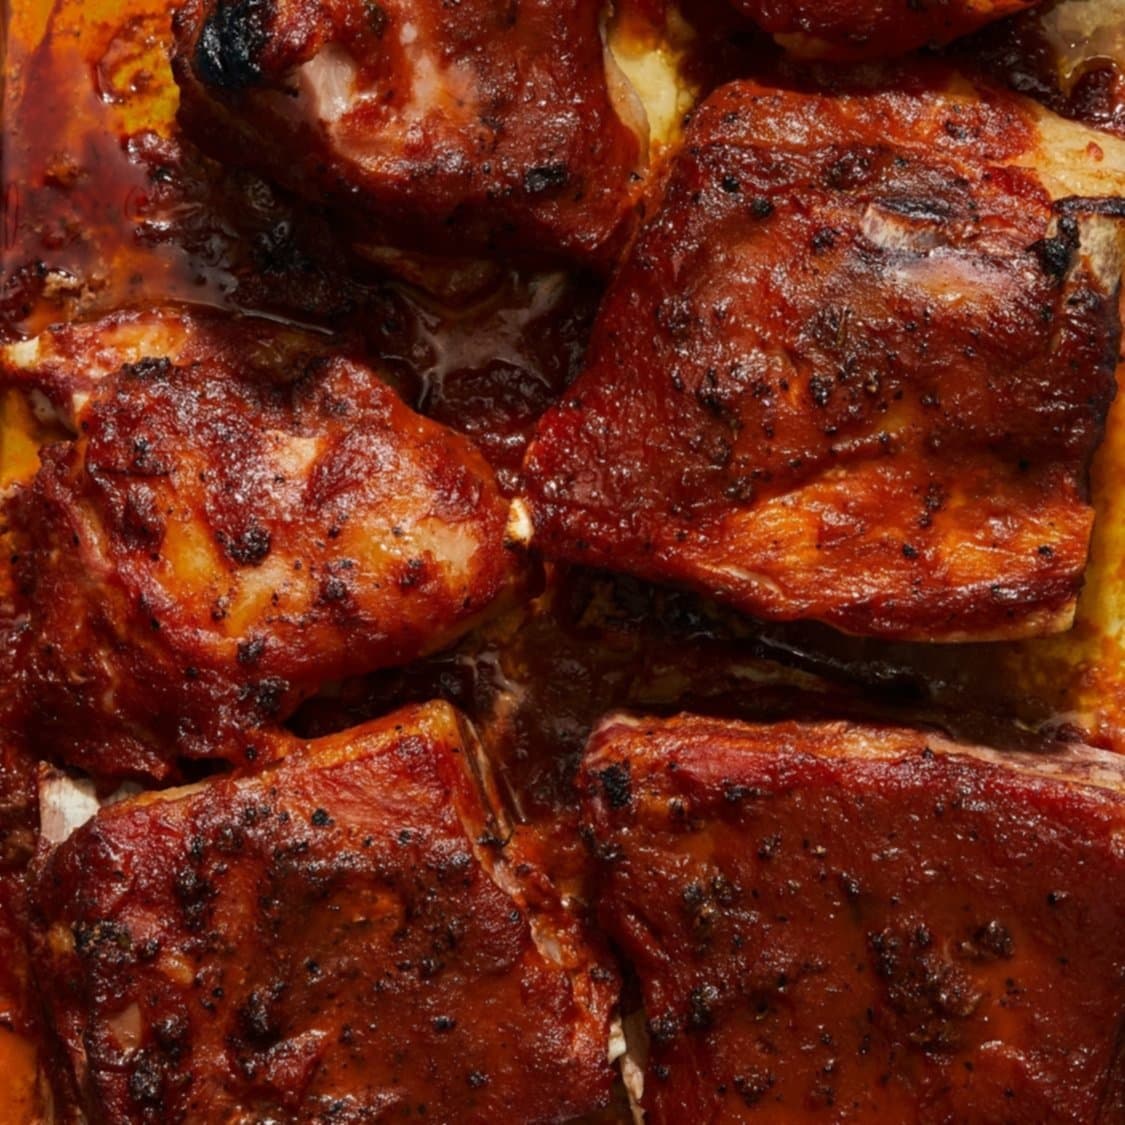 https://fleishigs.com/images/mobile-app/recipes/1743-list-sumac-spiced-lamb-ribs-with-peach-barbecue-sauce.jpg